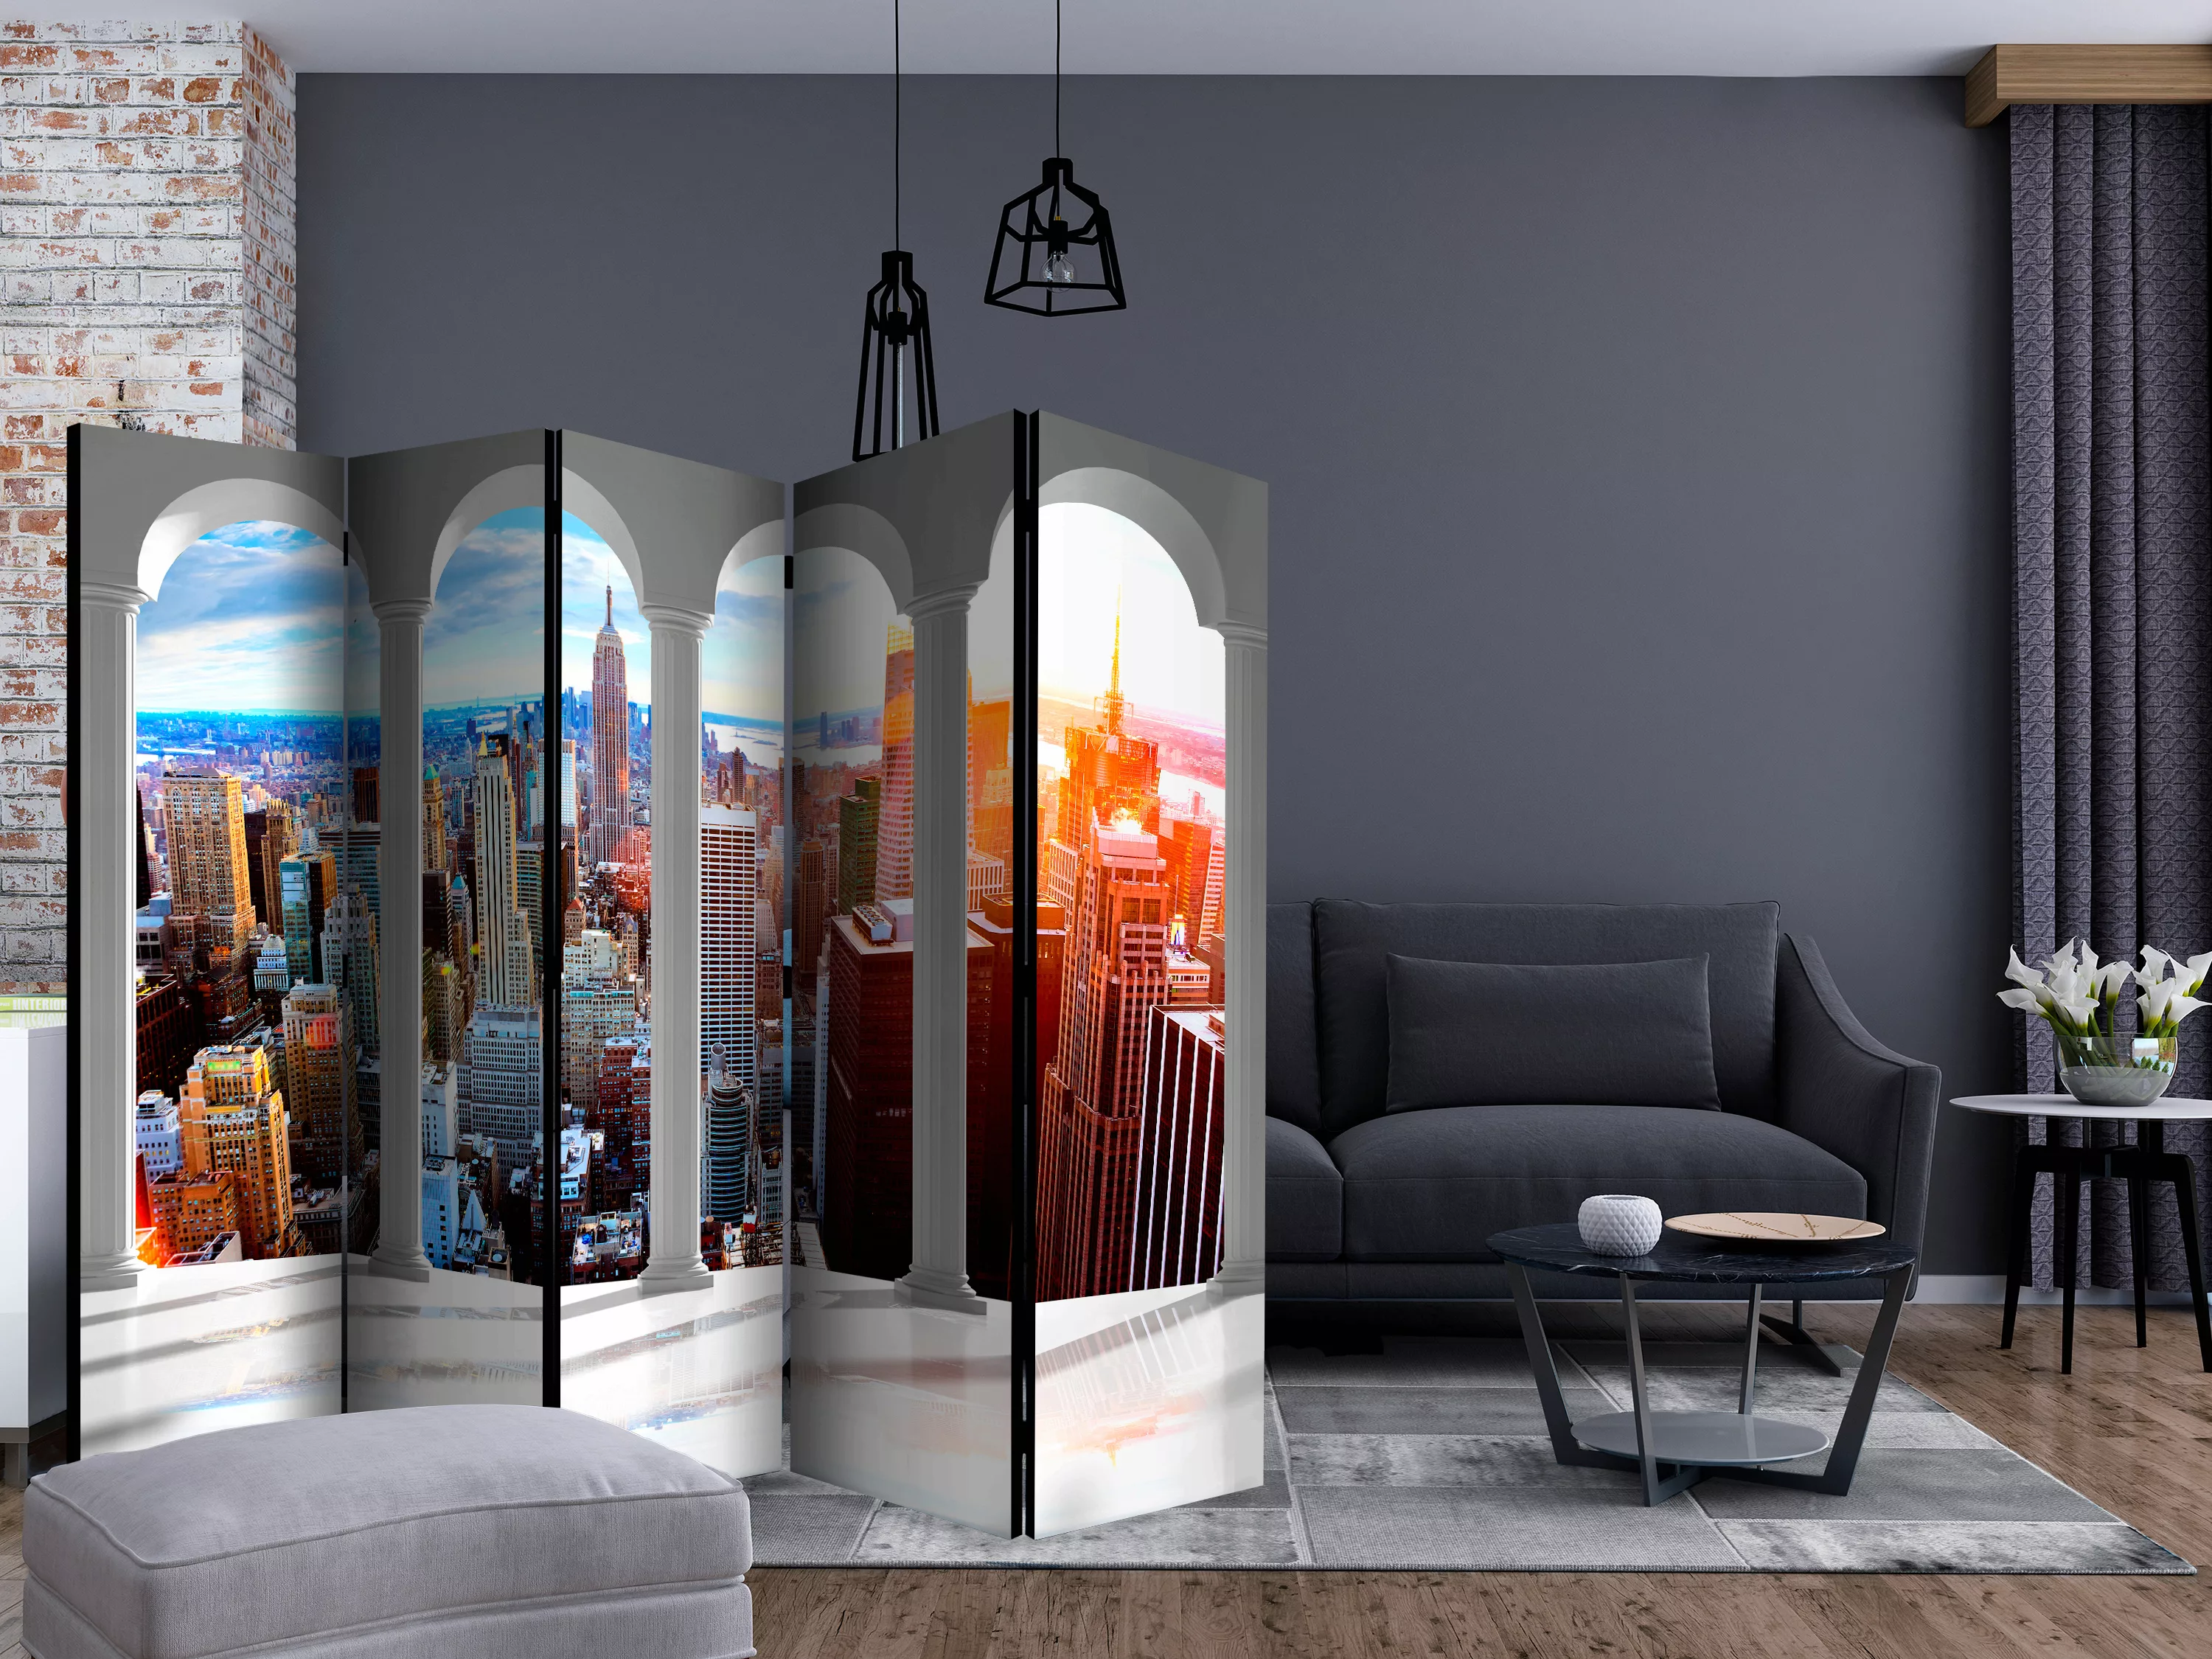 5-teiliges Paravent - Pillars And New York Ii [room Dividers] günstig online kaufen